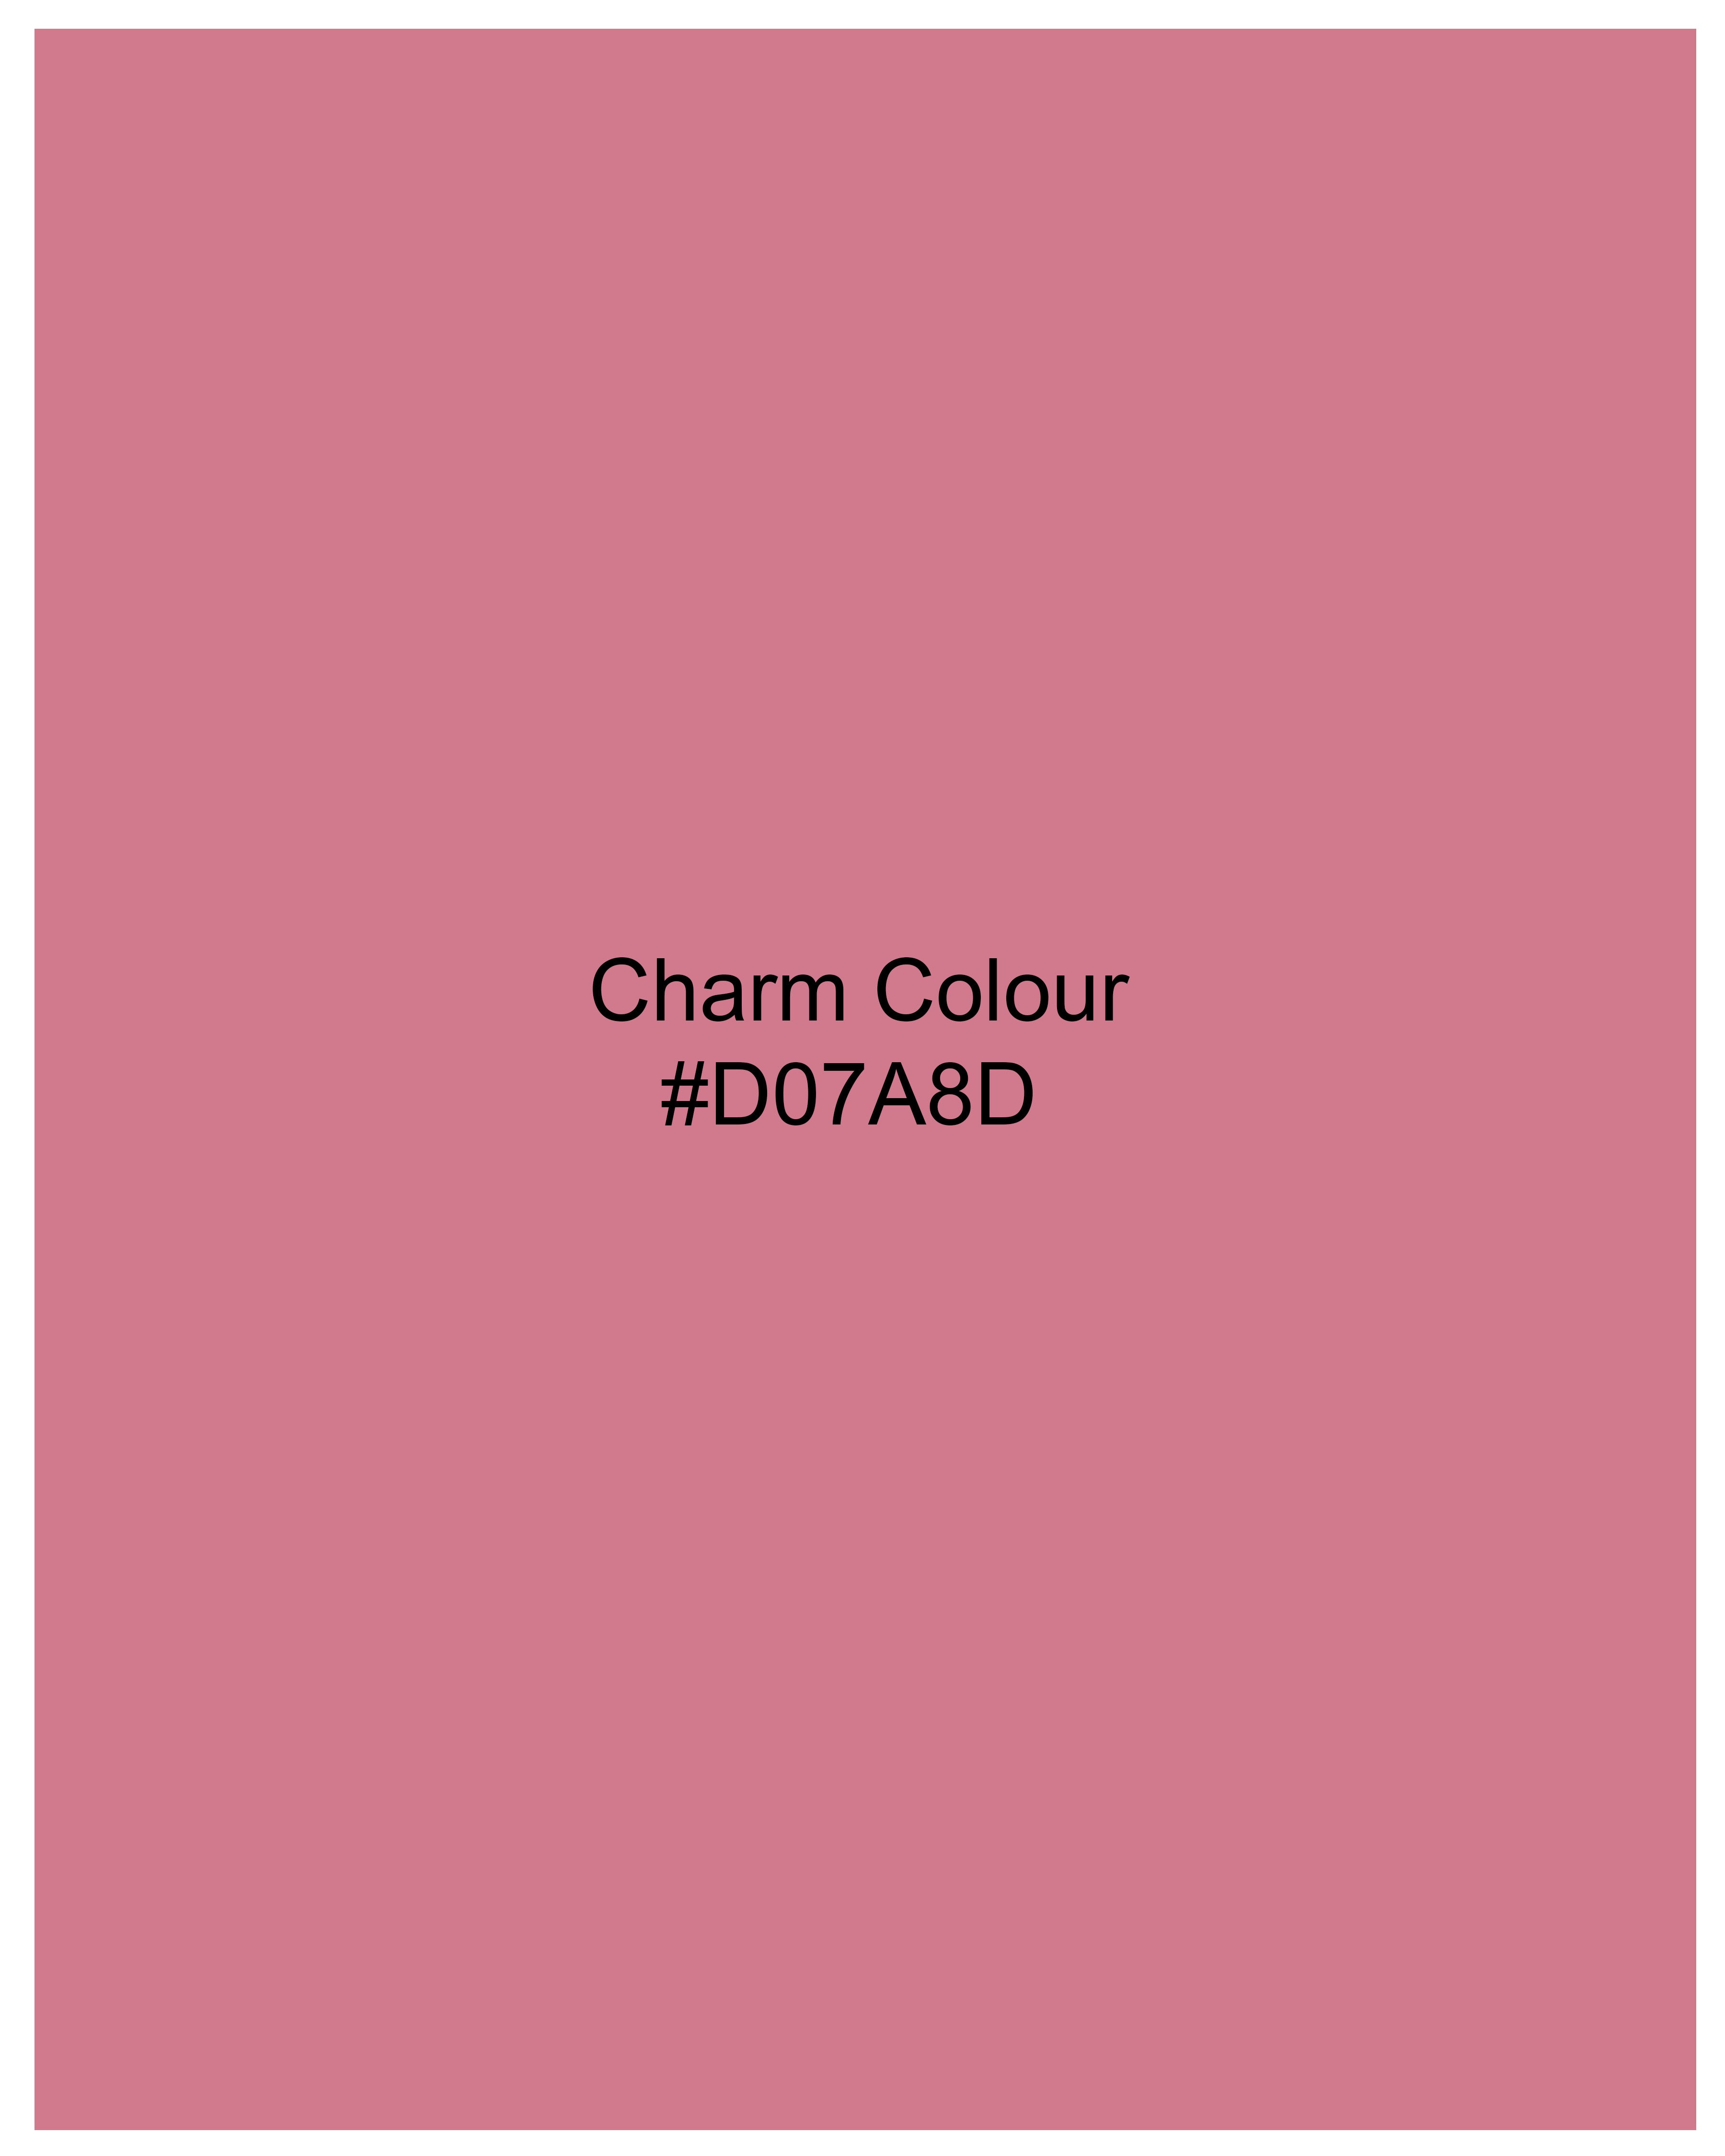 Charm Pink Chambray Designer Shirt 9060-P423-38, 9060-P423-H-38, 9060-P423-39, 9060-P423-H-39, 9060-P423-40, 9060-P423-H-40, 9060-P423-42, 9060-P423-H-42, 9060-P423-44, 9060-P423-H-44, 9060-P423-46, 9060-P423-H-46, 9060-P423-48, 9060-P423-H-48, 9060-P423-50, 9060-P423-H-50, 9060-P423-52, 9060-P423-H-52